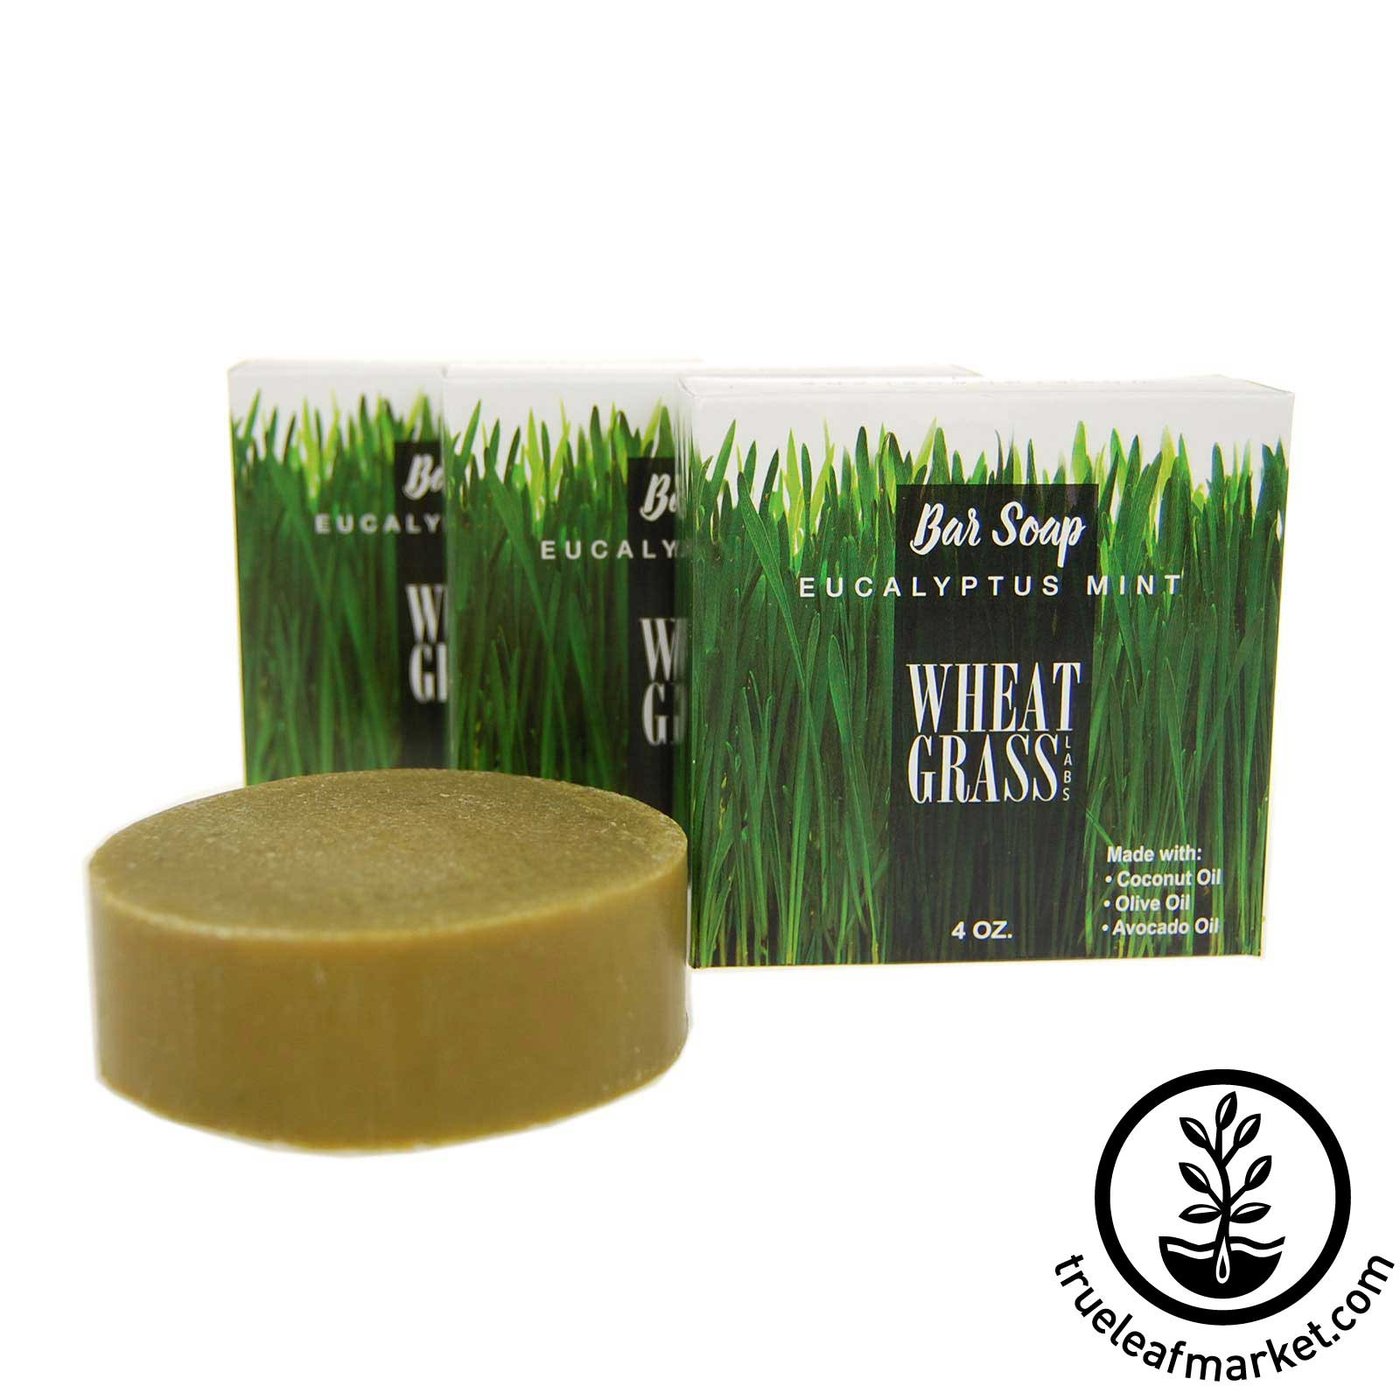 Wheatgrass & Eucalyptus Mint Bar Soap